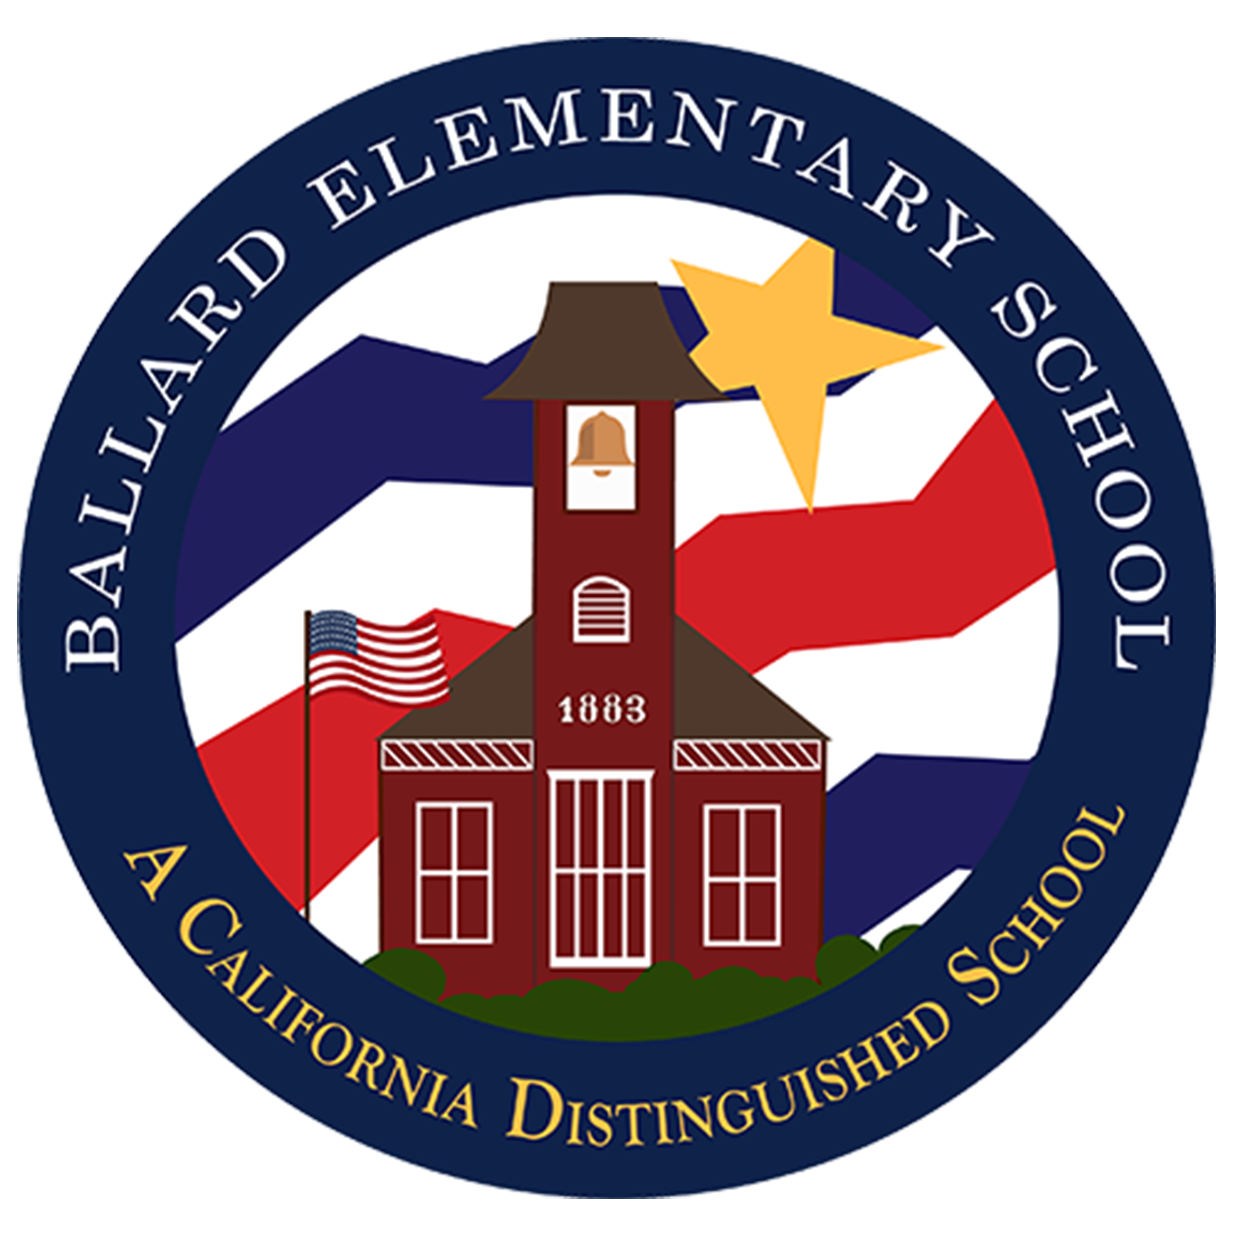 Ballard Elementary School